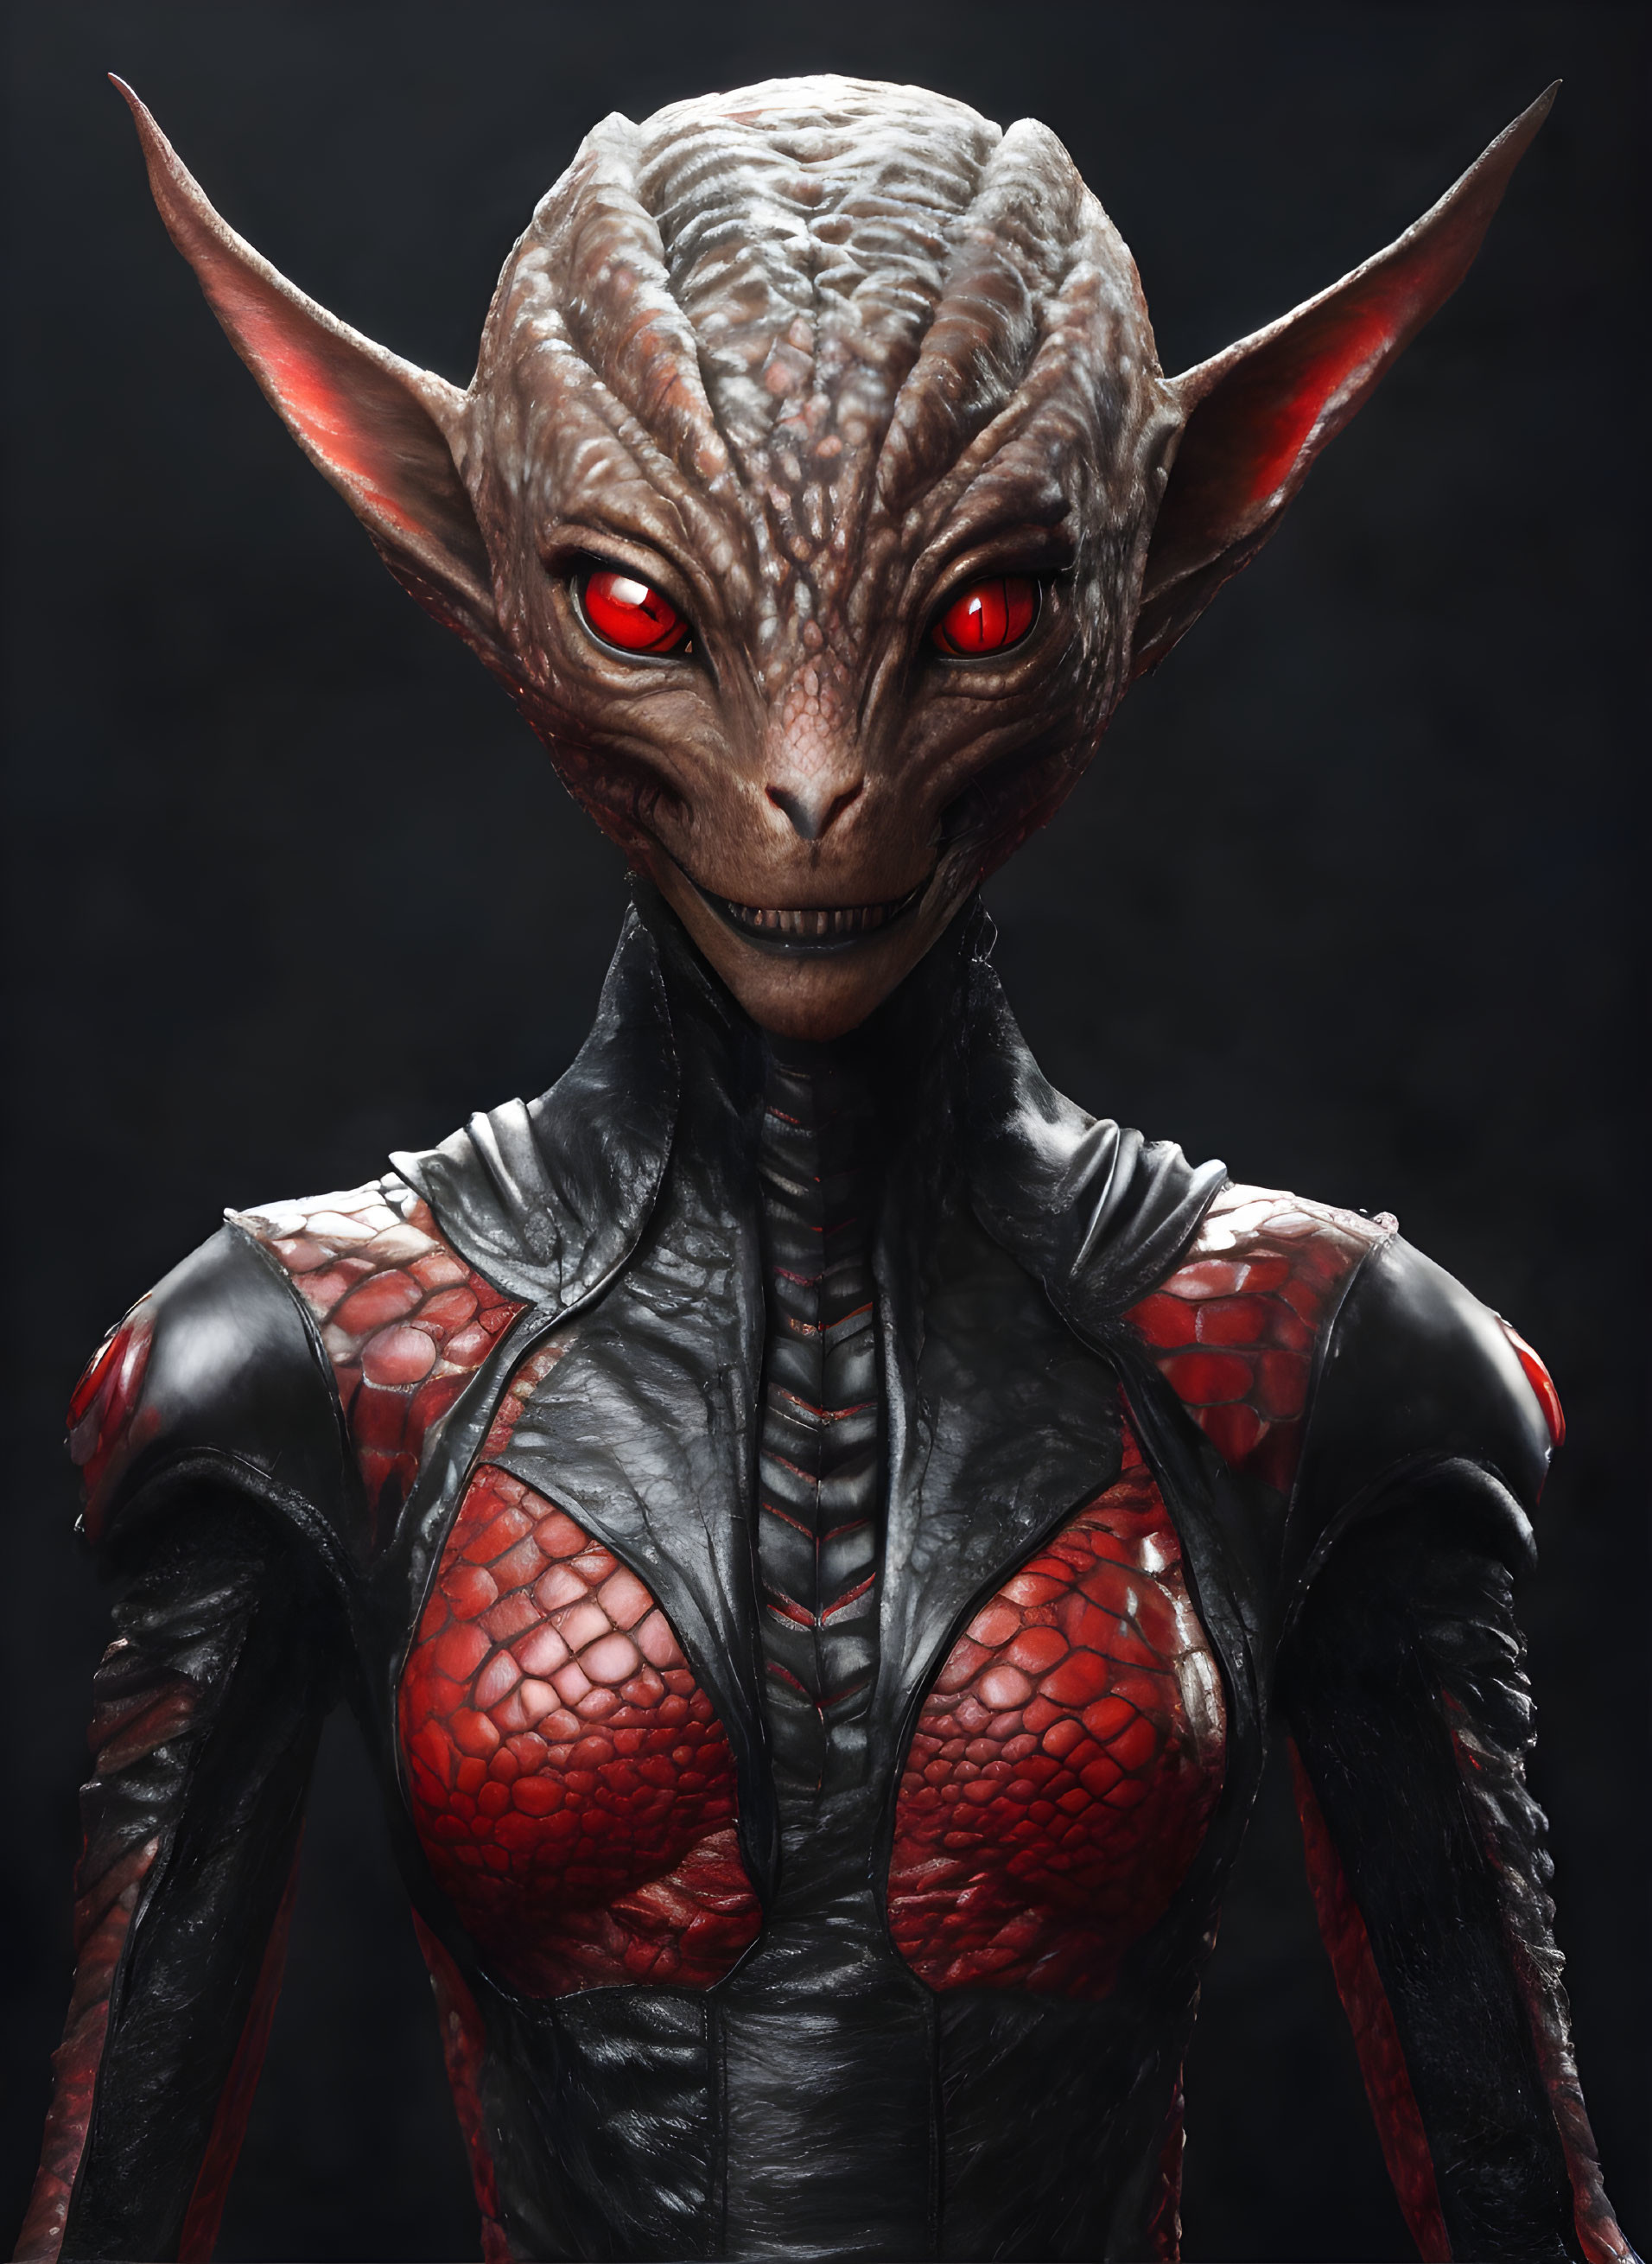 Portrait of an anthropomorphic alien